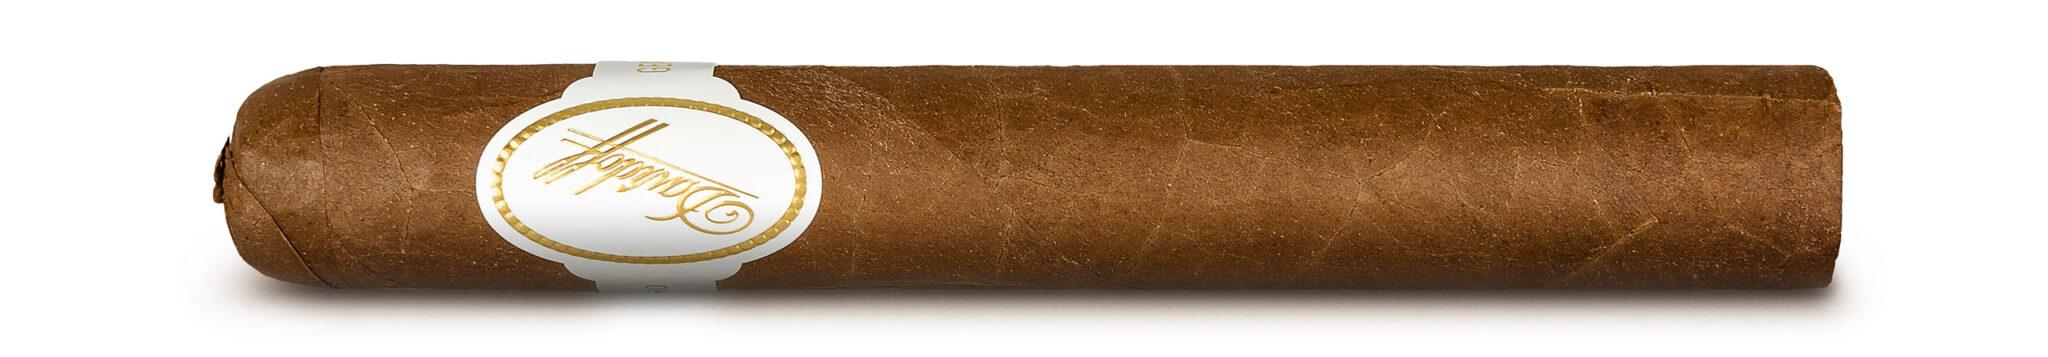 Сигара №17 2022 года по версии Cigarjournal — DAVIDOFF DOMINICANA TORO